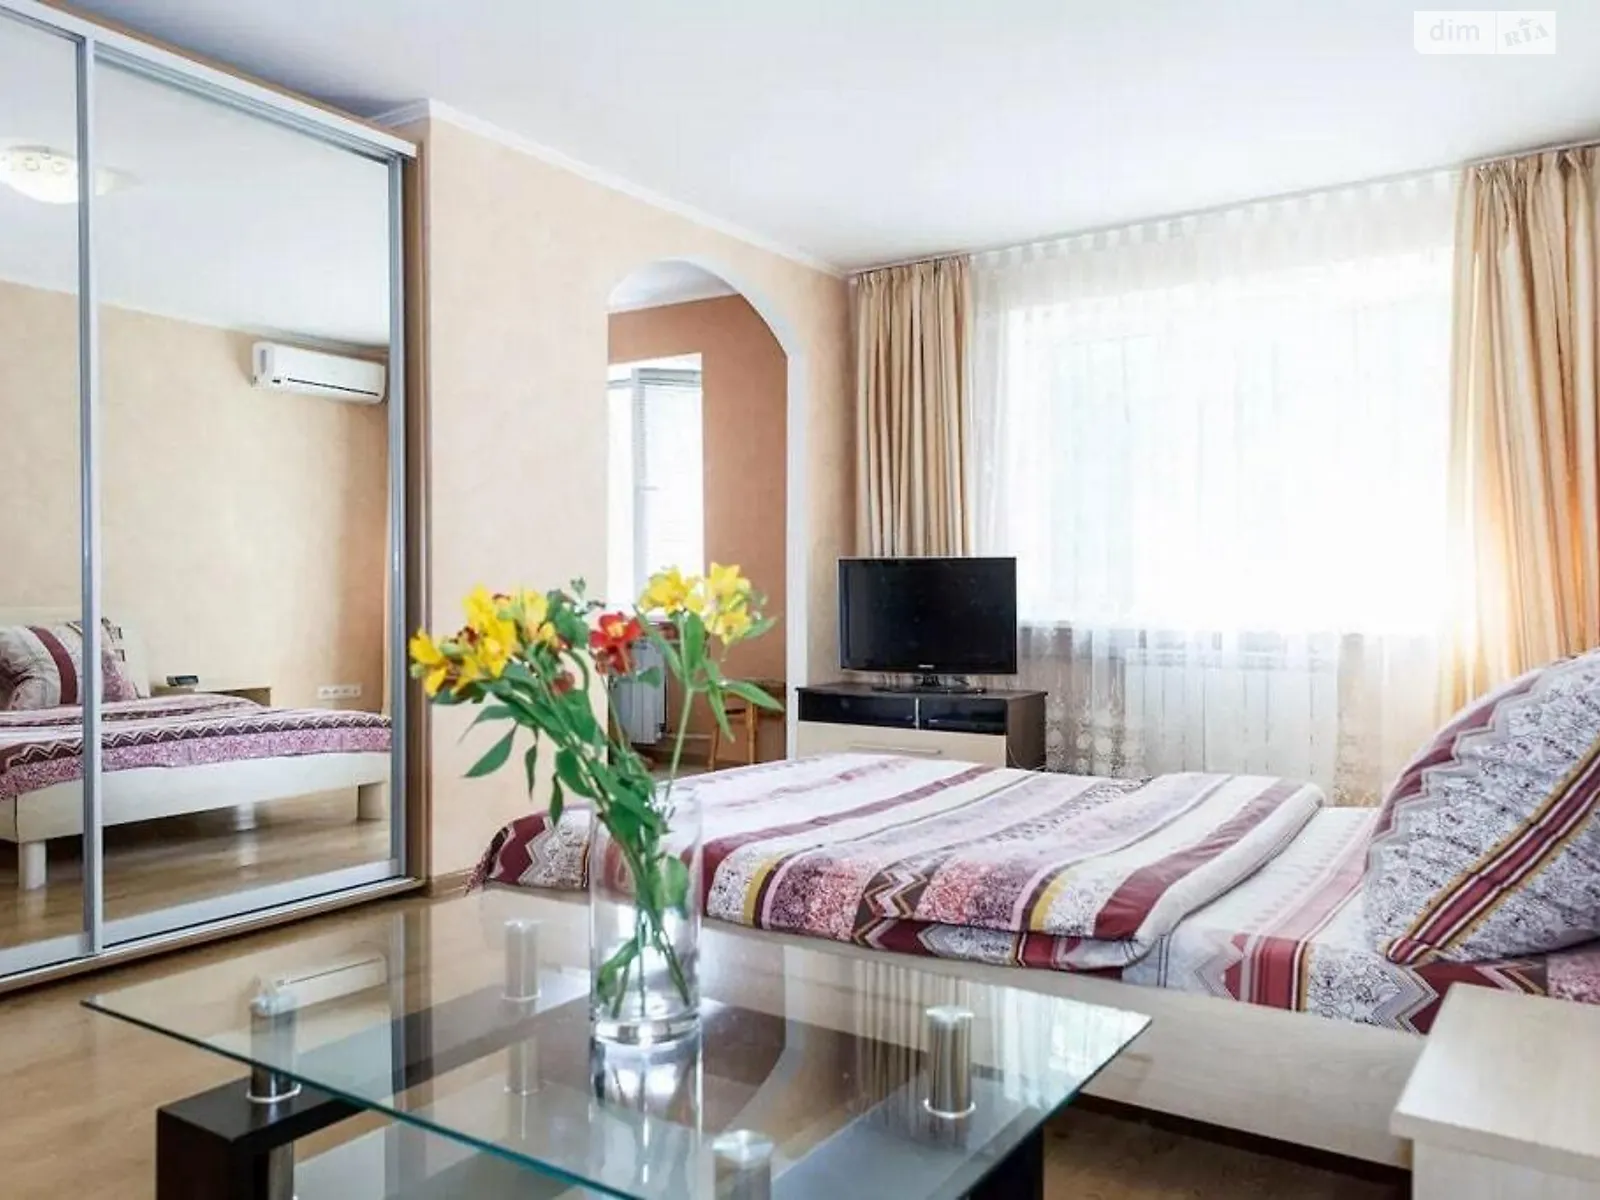 1-кімнатна квартира у Запоріжжі, цена: 850 грн